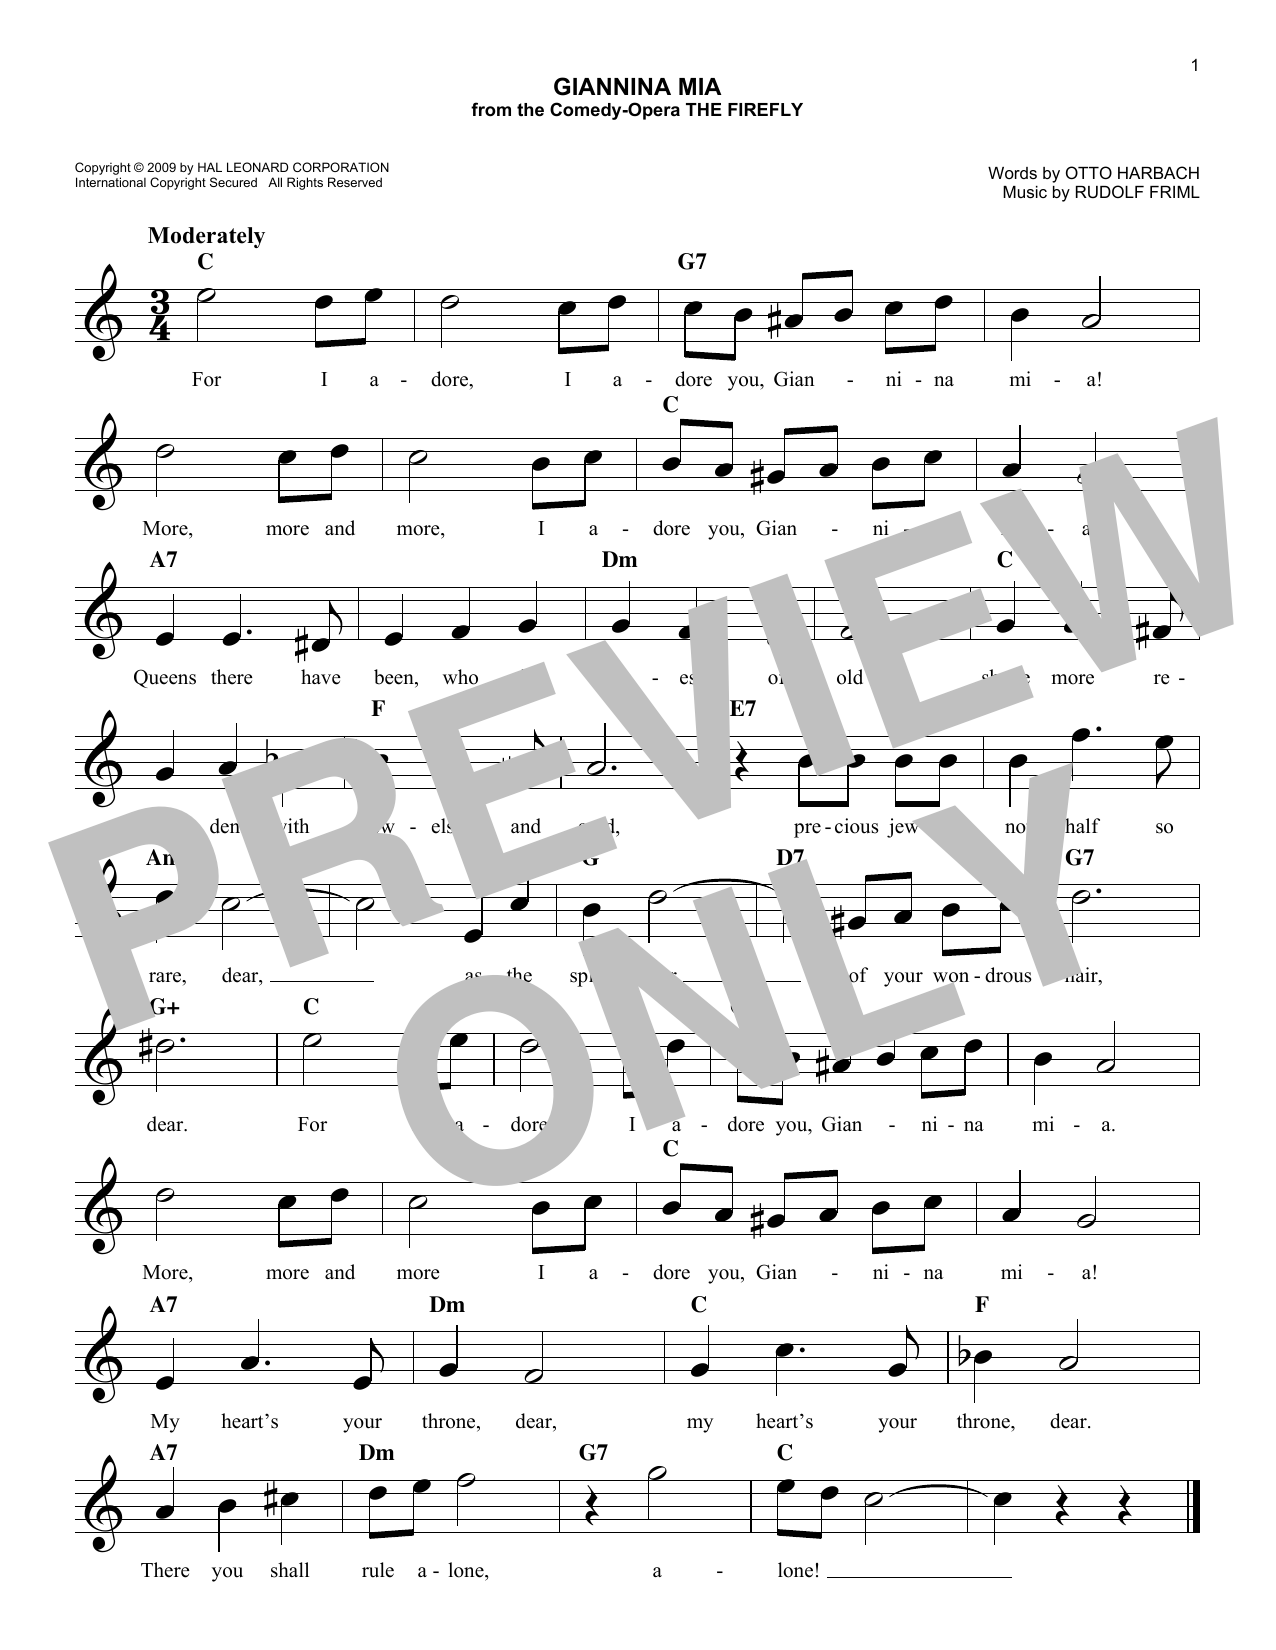 Rudolf Friml Giannina Mia sheet music notes and chords. Download Printable PDF.